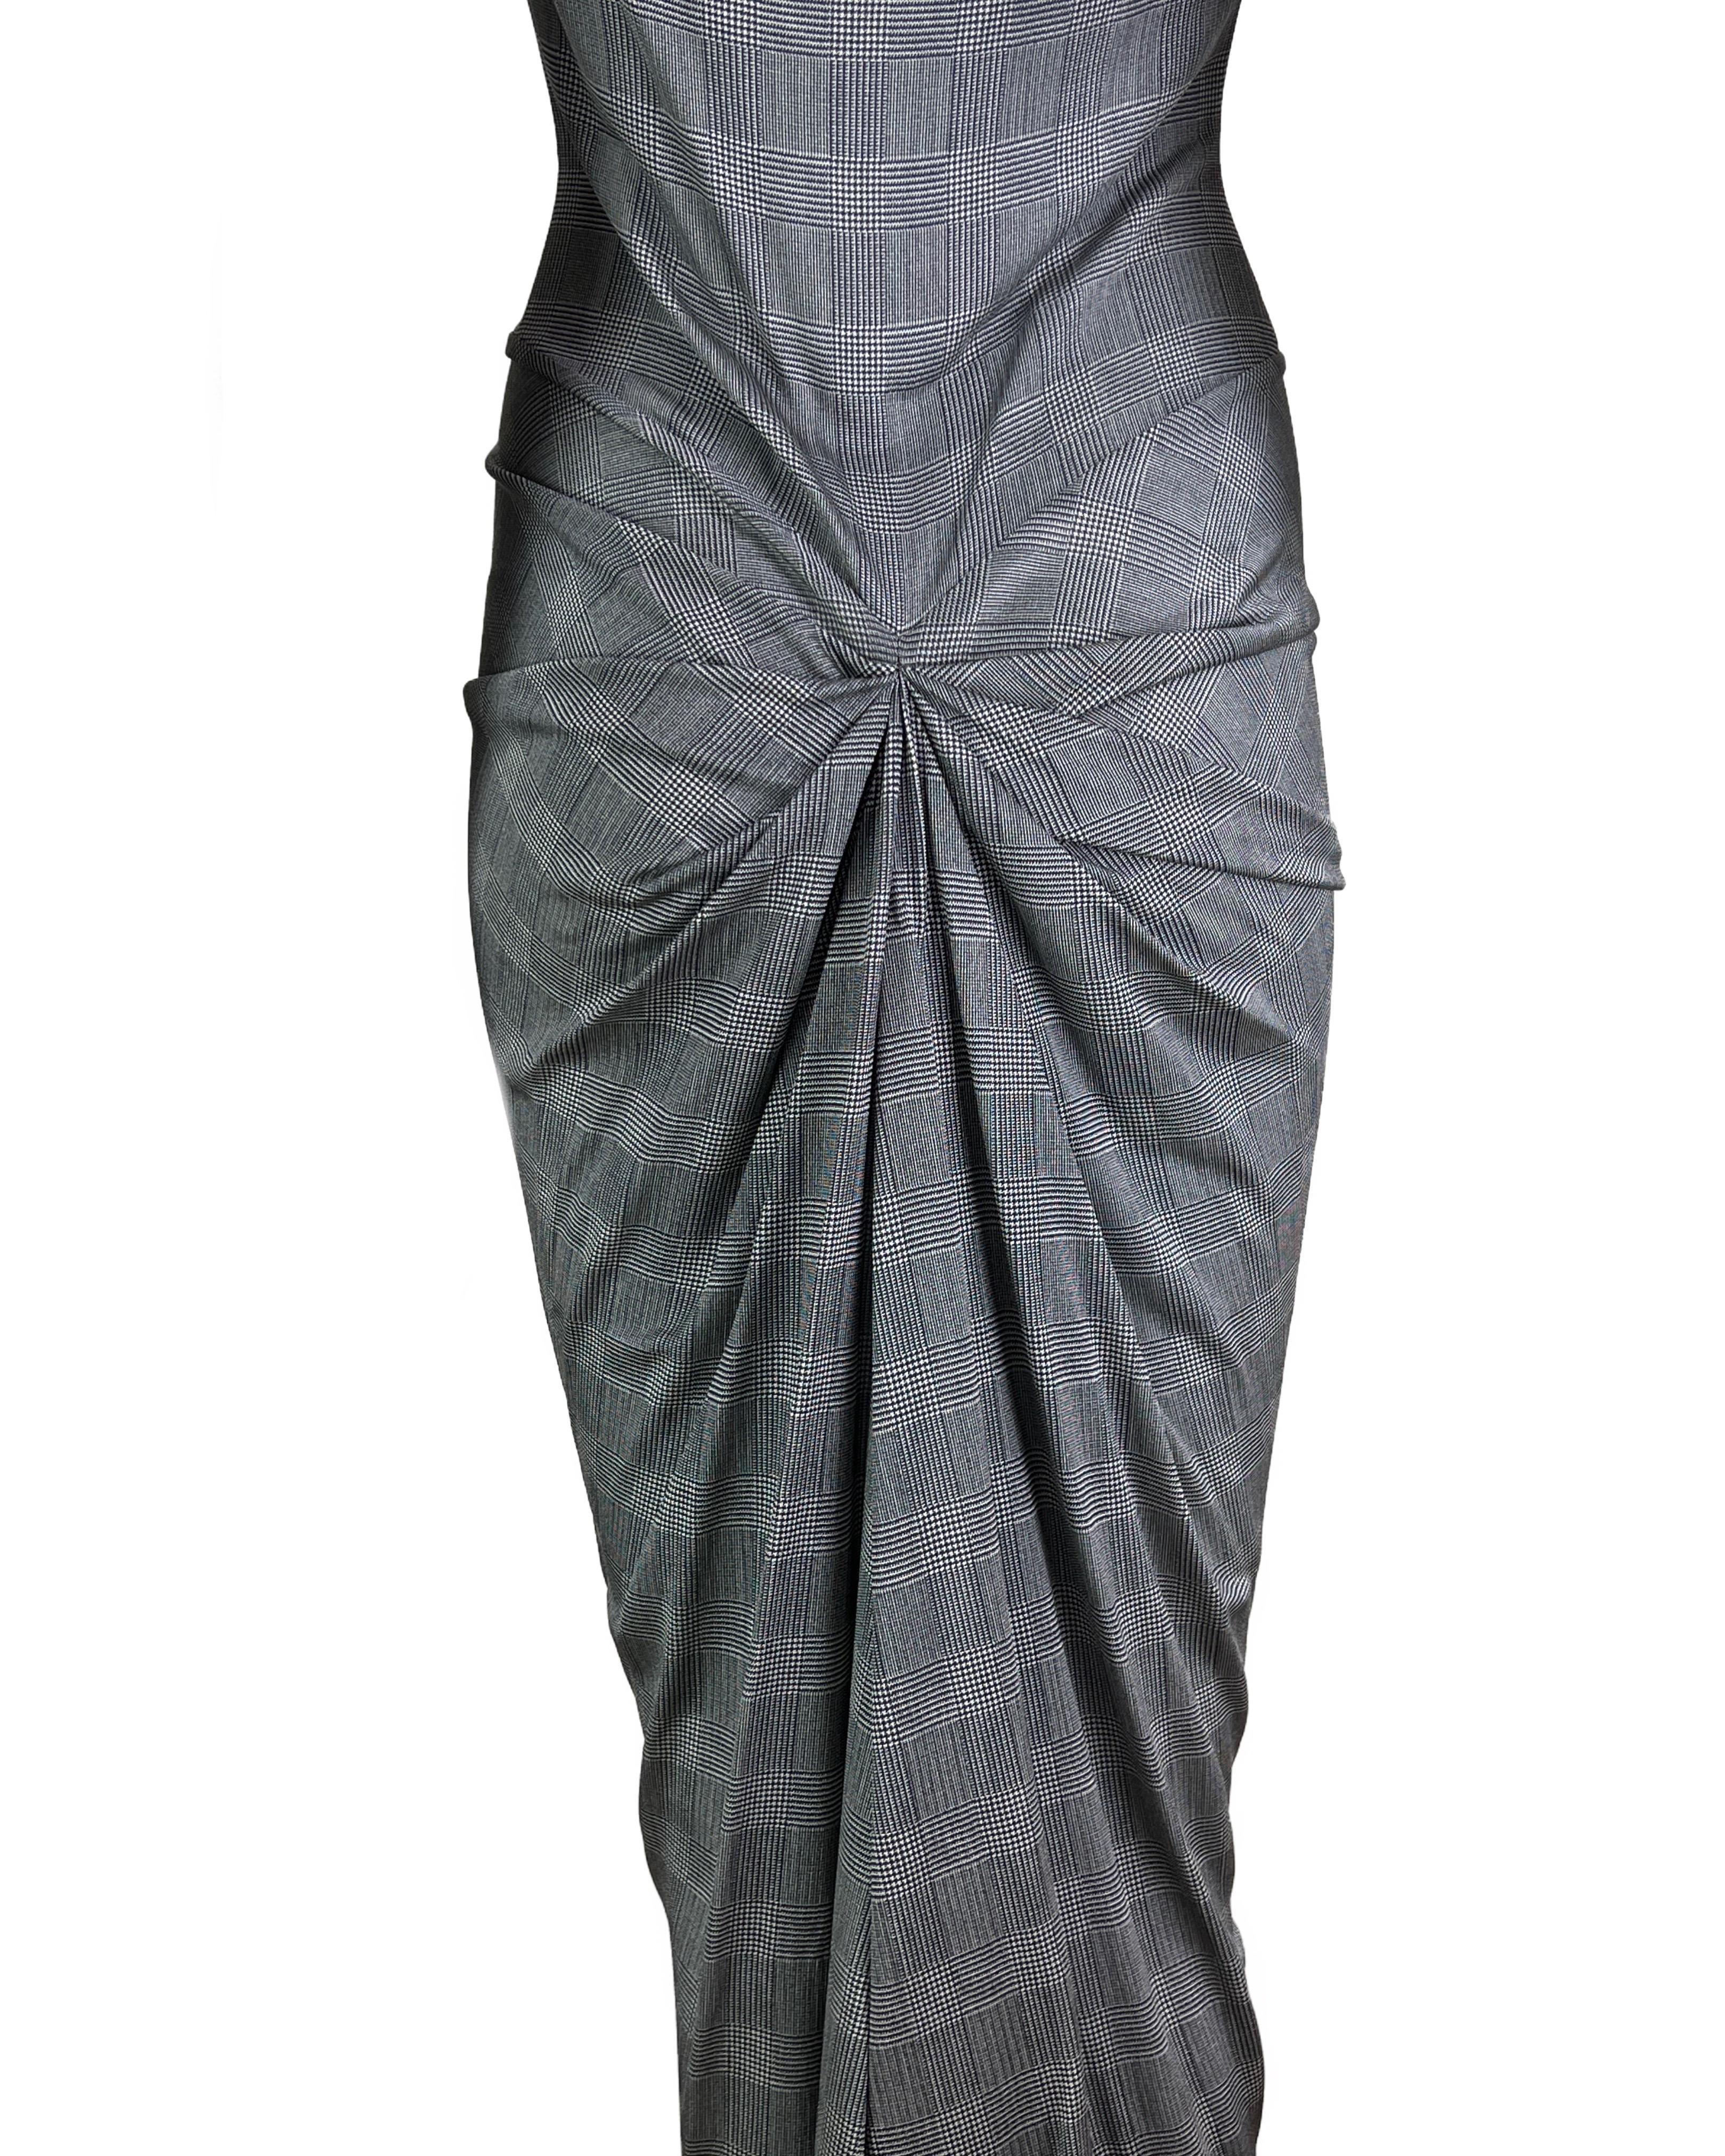 Dior by John Galliano Spring 2000 Plaid Print Silk Draped Grey Jersey Dress For Sale 1